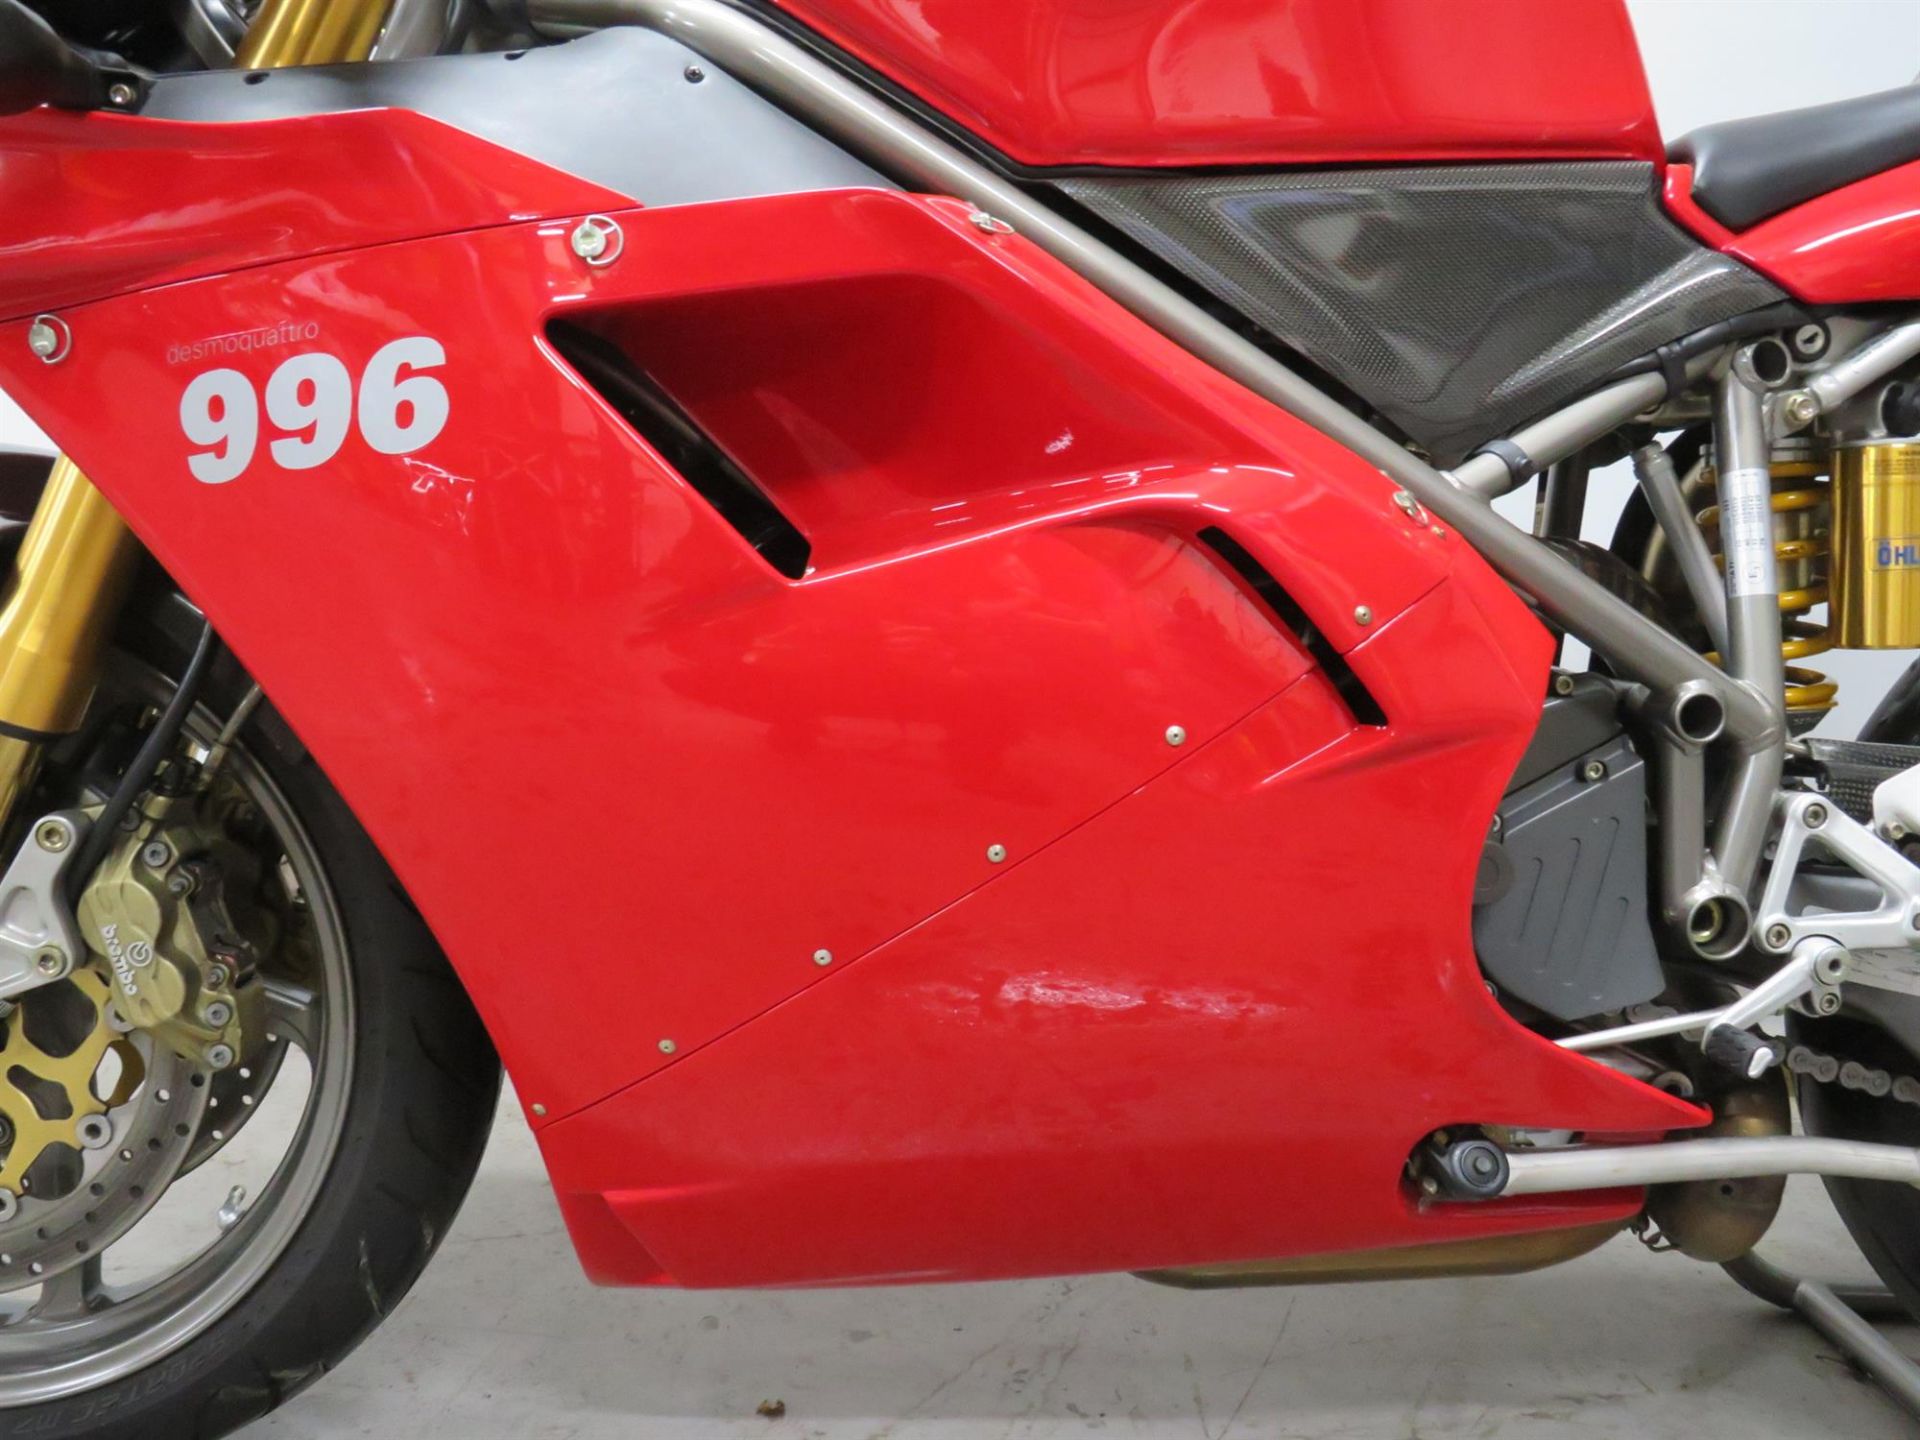 2001 Ducati 996 SPS FR2 996cc - Image 4 of 10